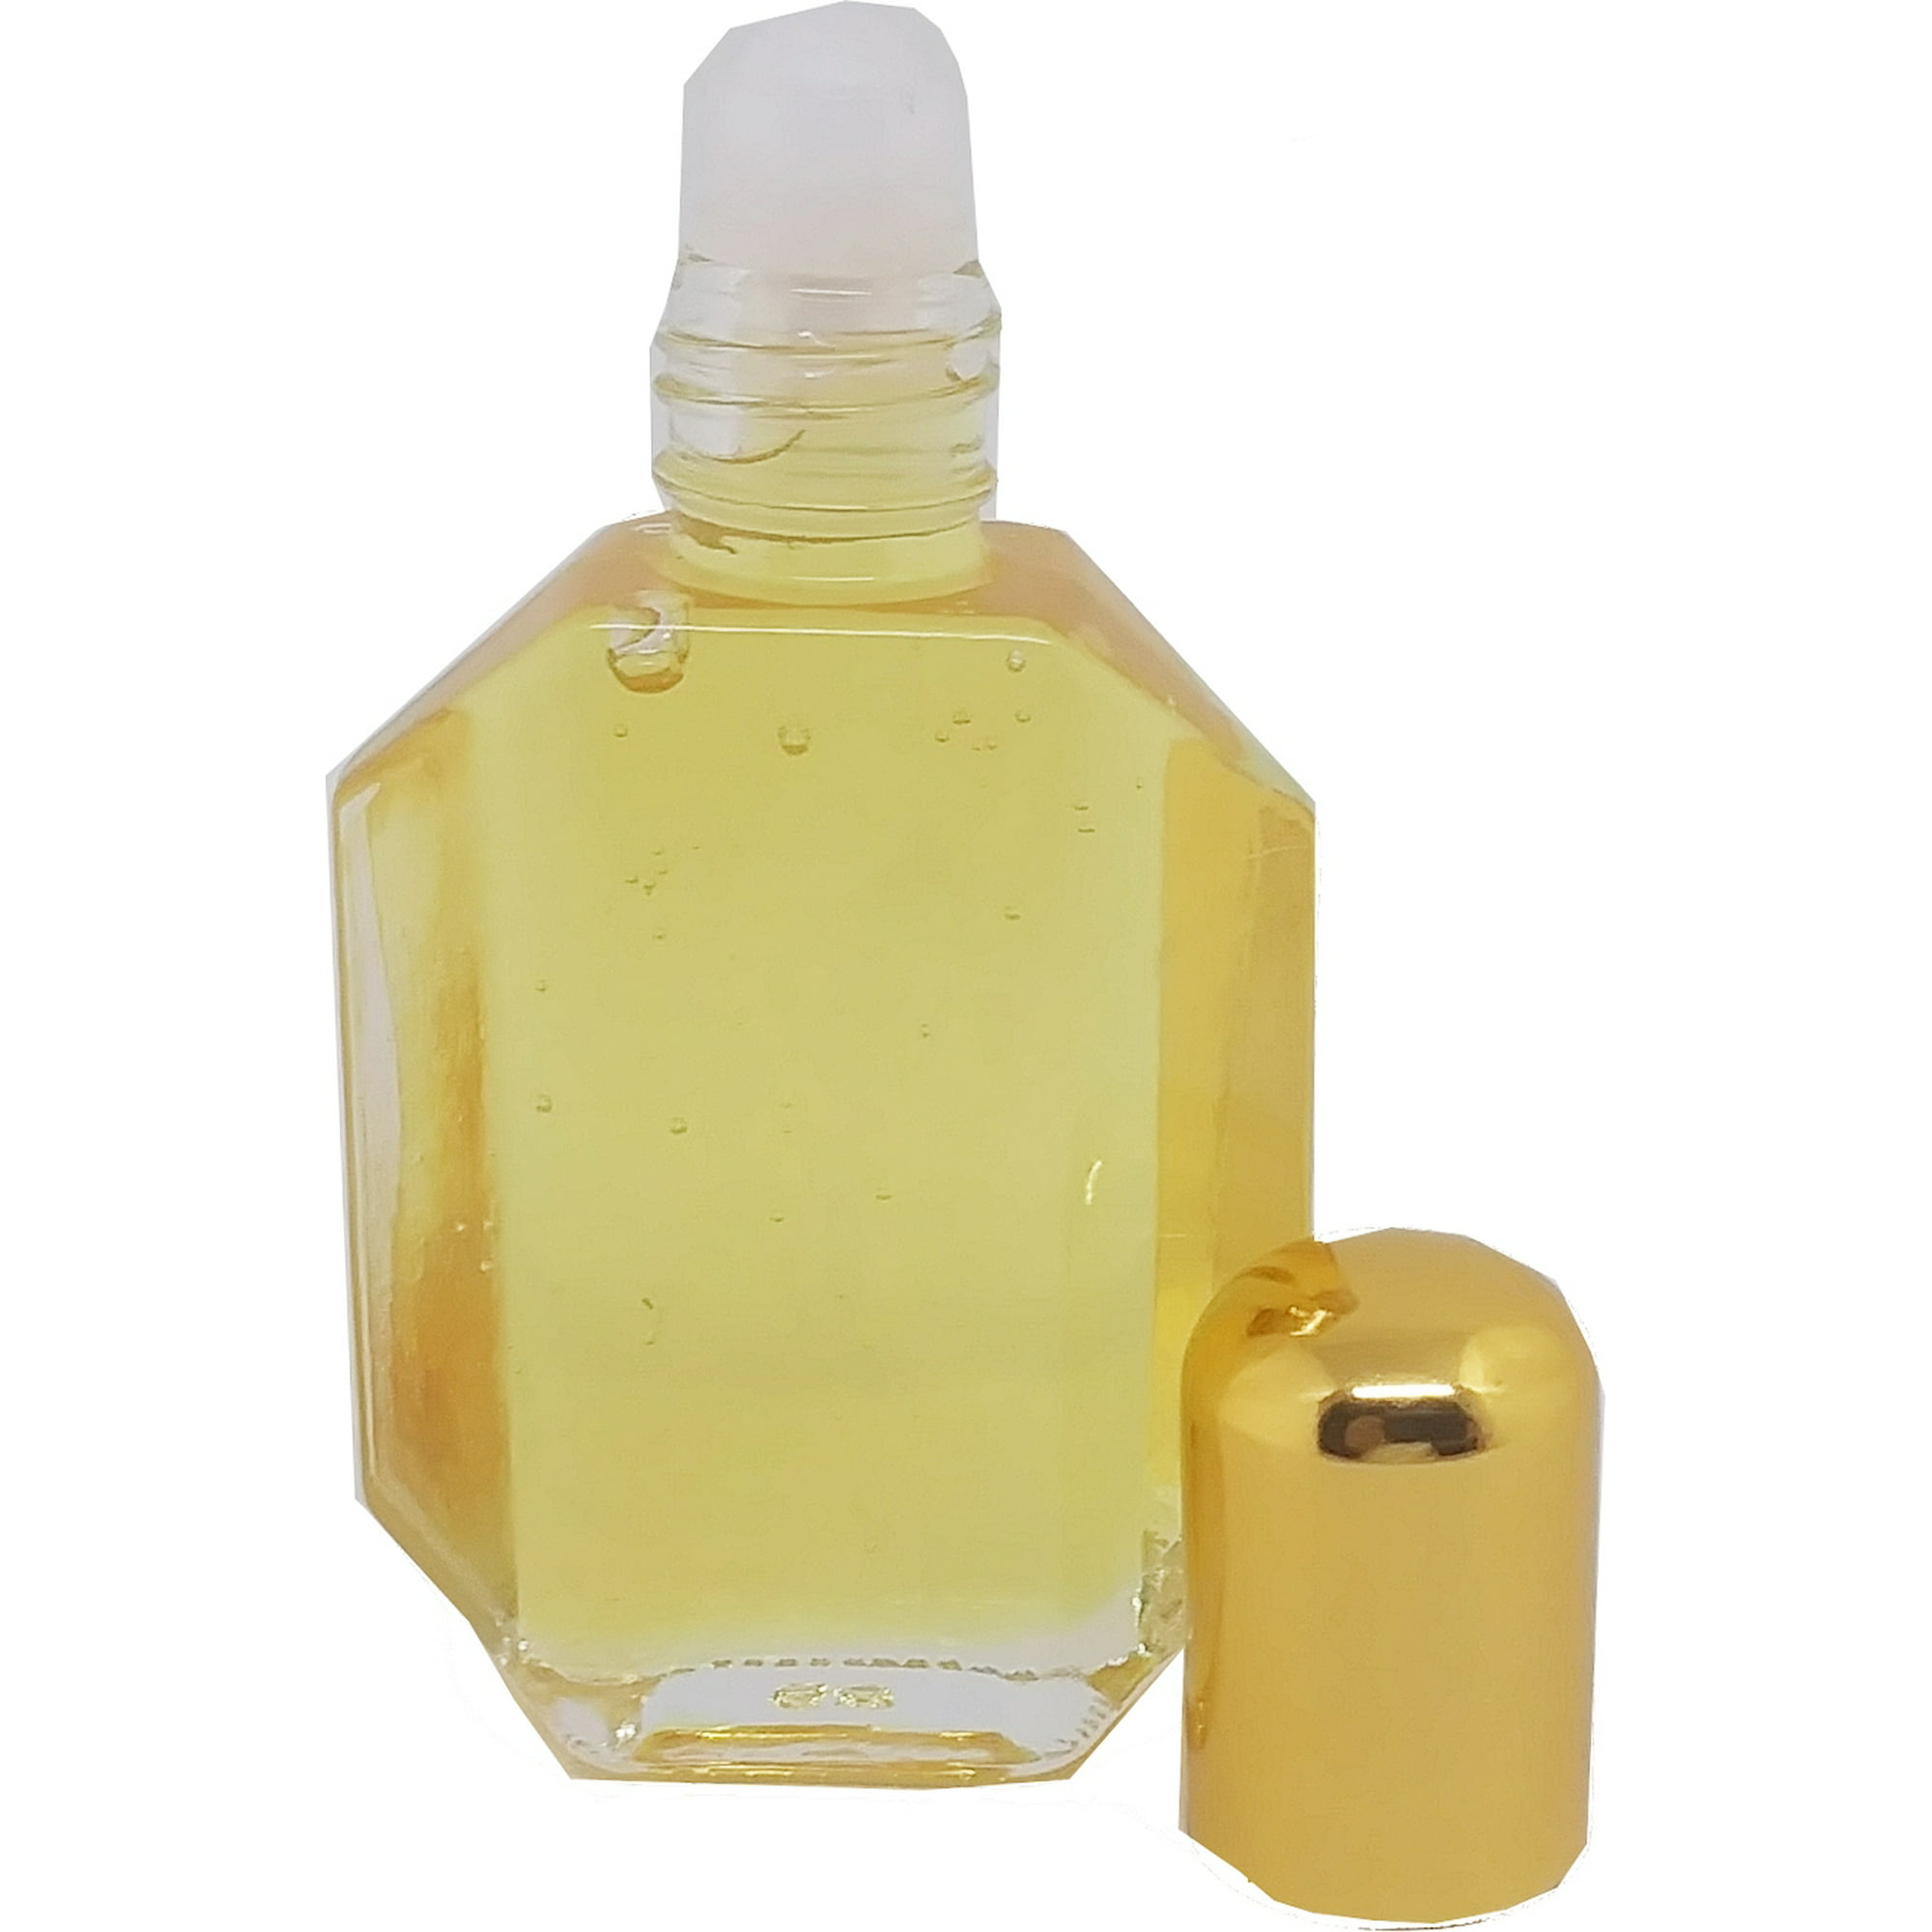 Body Oils: Fragrance(Perfume)Body Oils